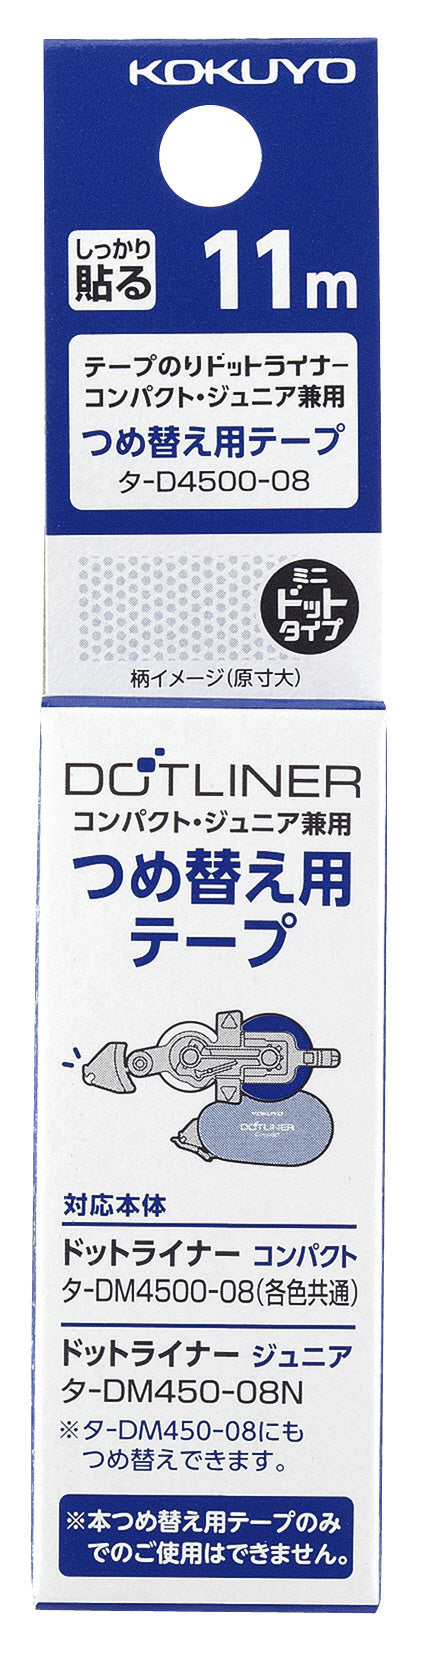 Dotliner點點雙面膠帶 Compact 替芯 強黏藍色點點